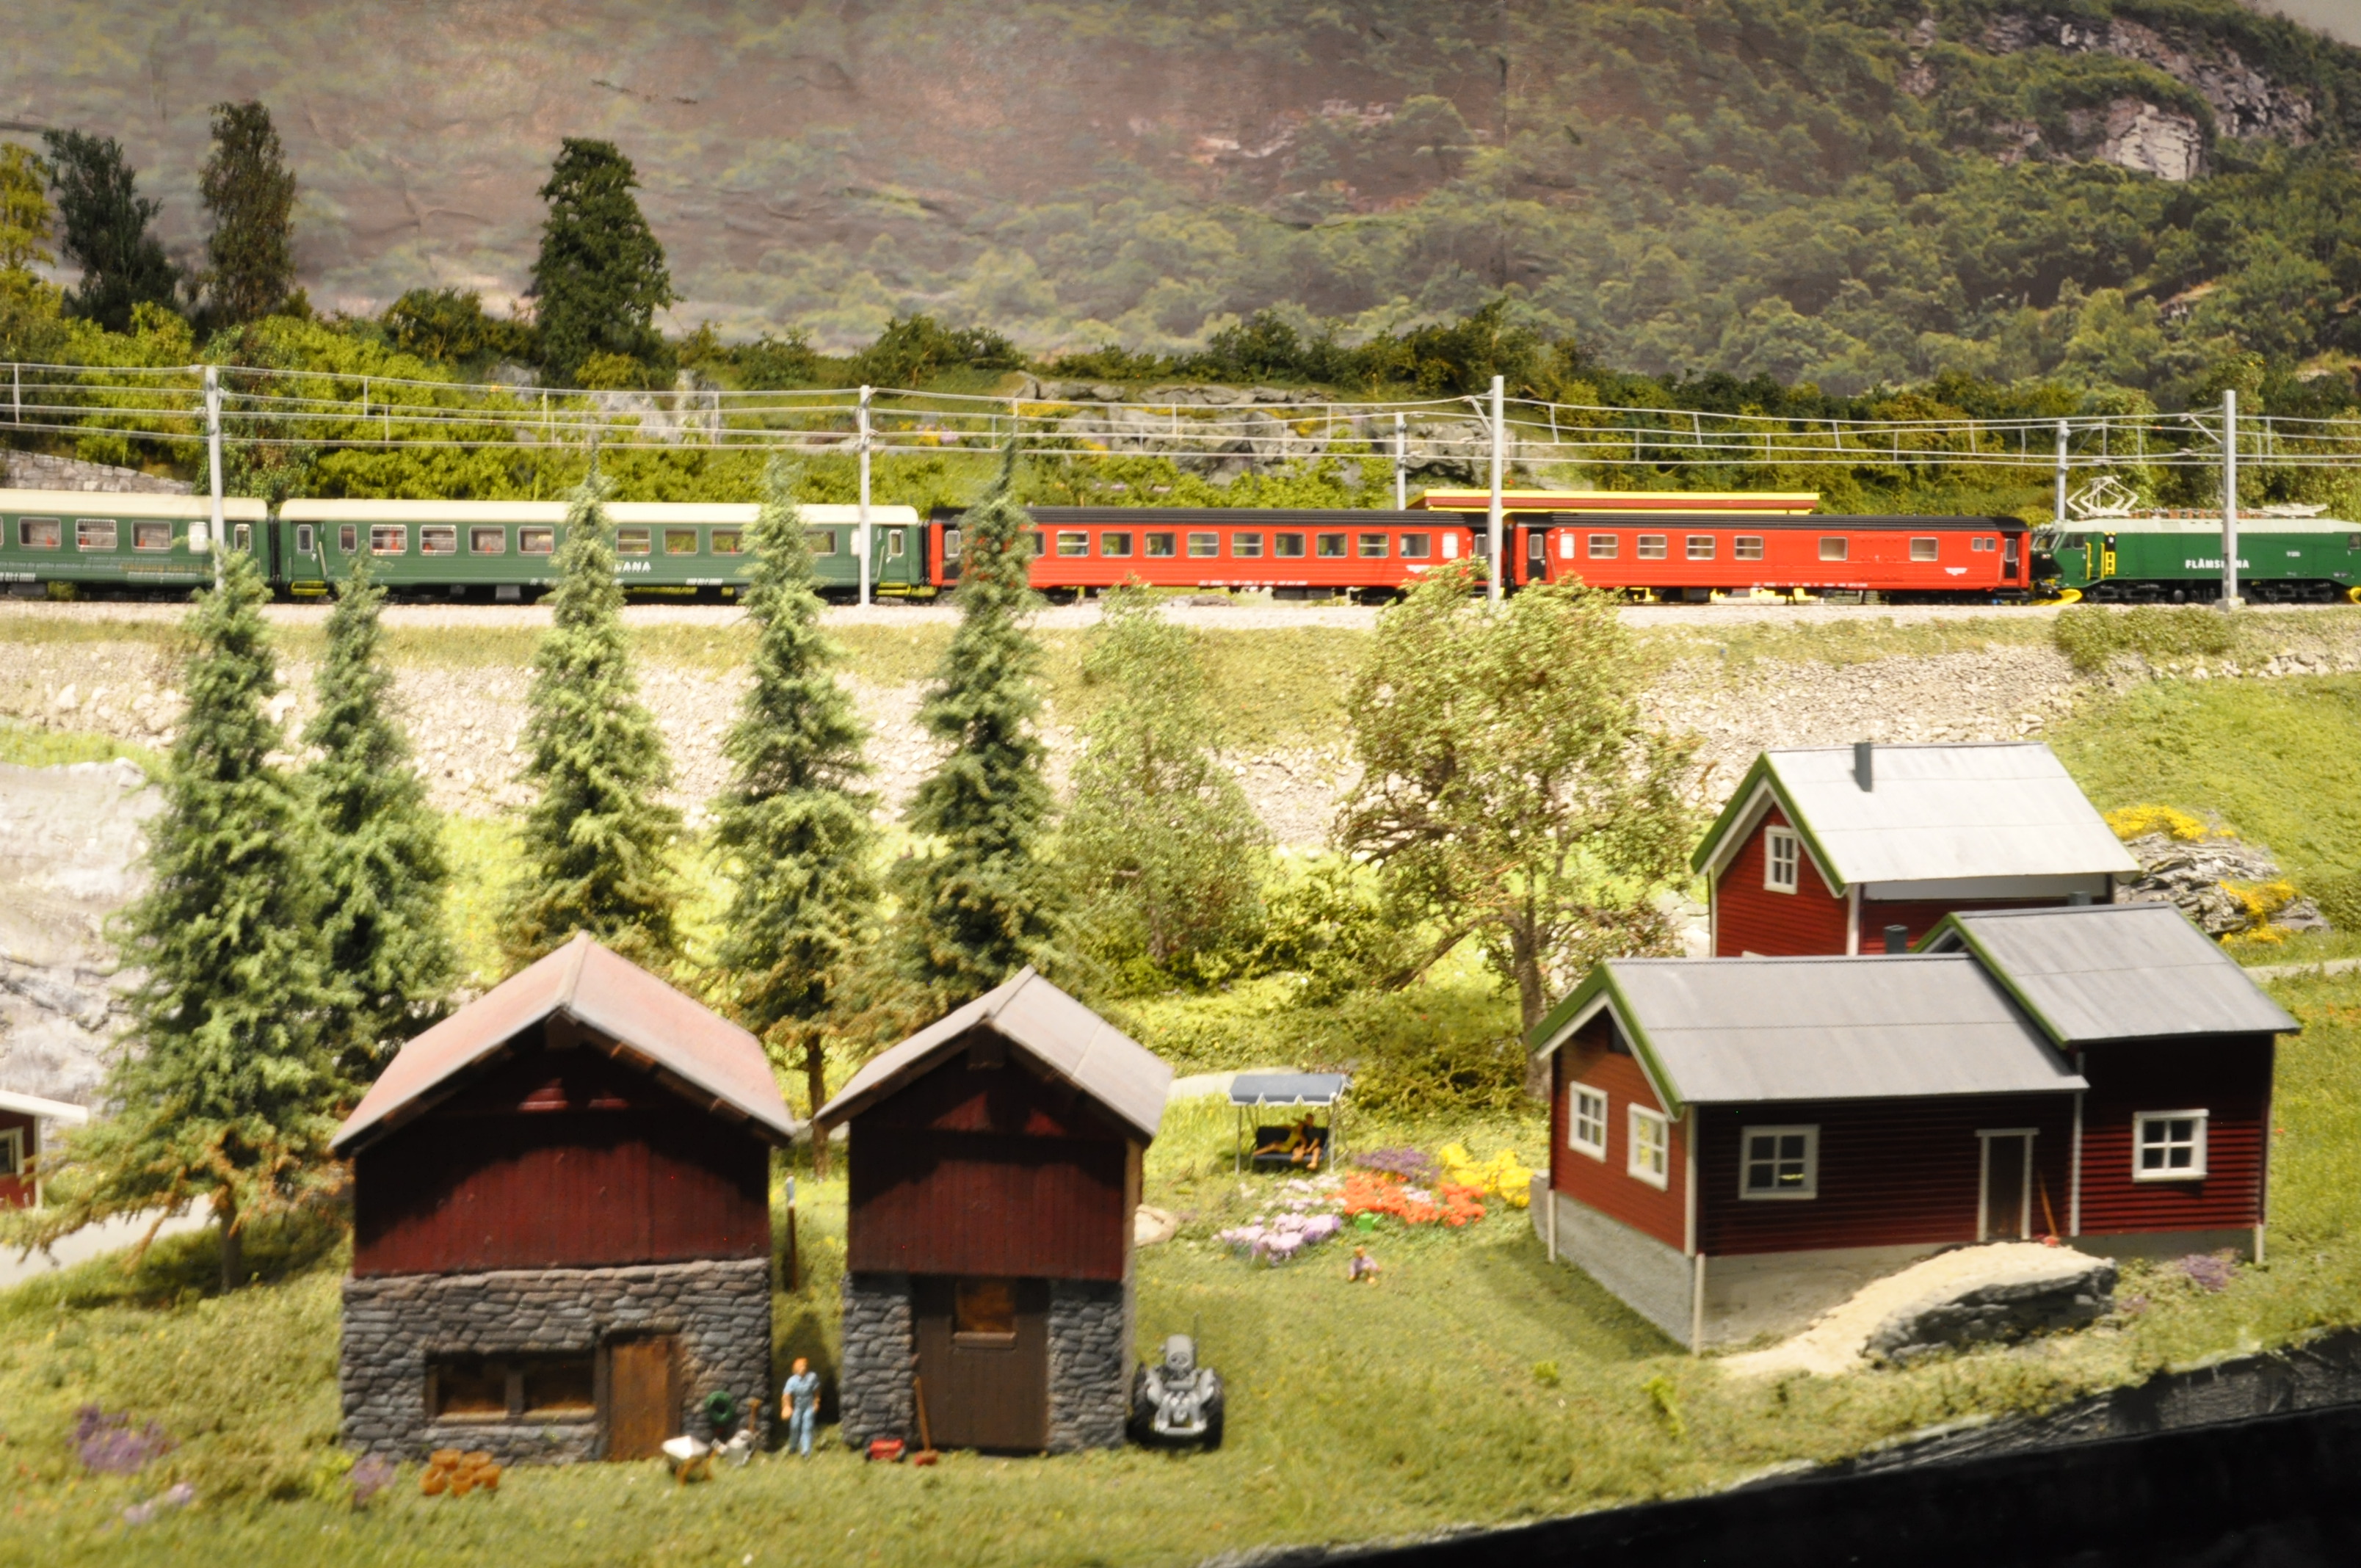 Norsk jernbanemuseum, modelljenbanmessen, toglandskap